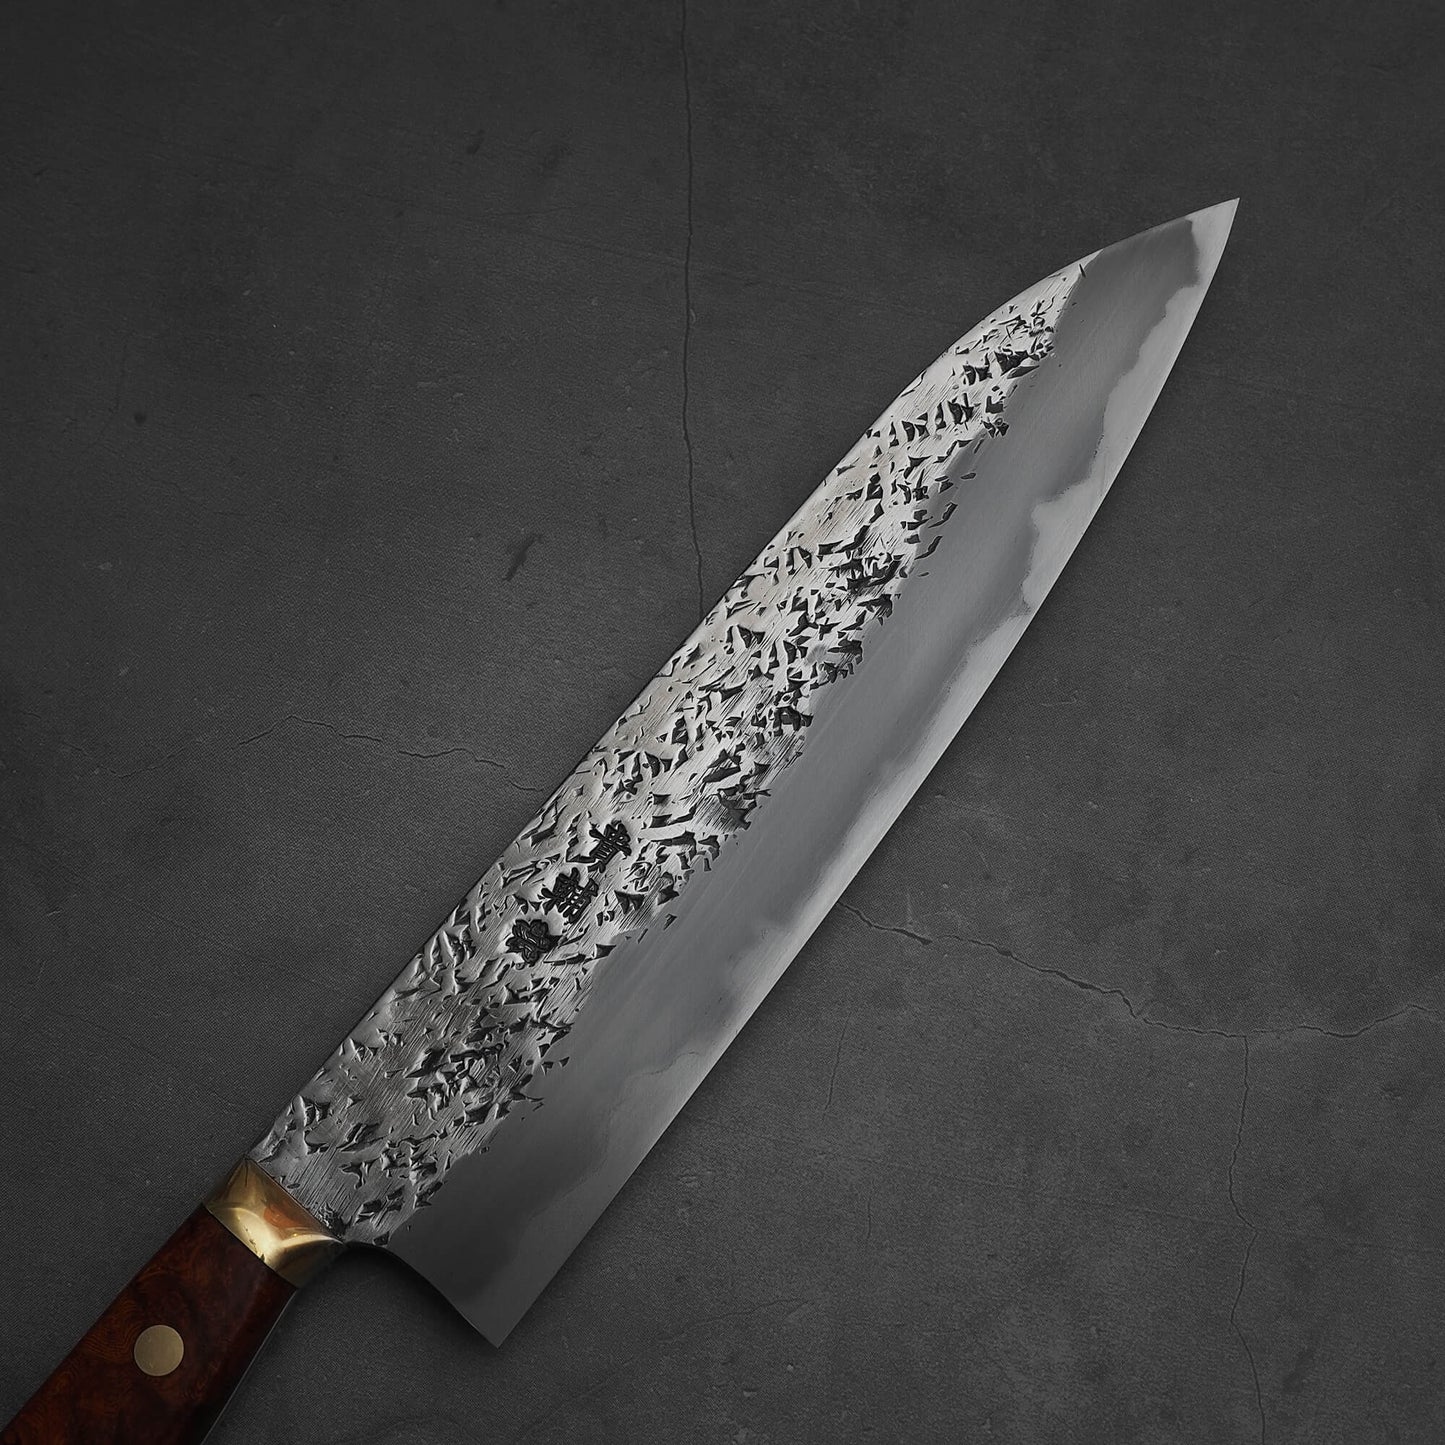 Top view of 240mm Kisuke Manaka tsuchime honwarikomi shirogami#2 gyuto knife. Image focuses on the right side of the knife